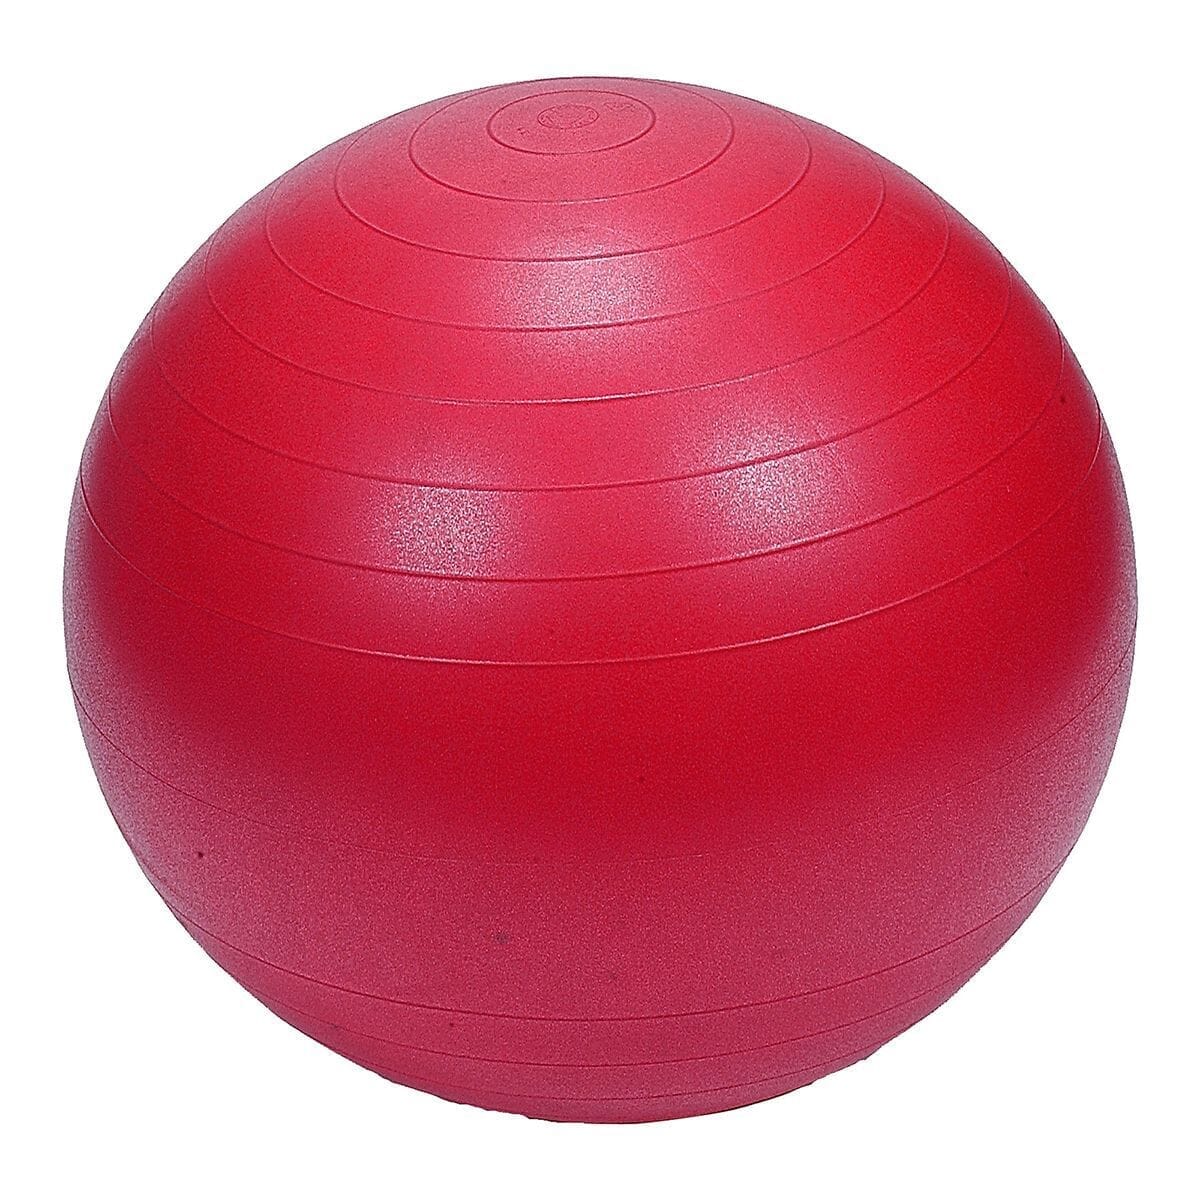 View Gym Balls Red information